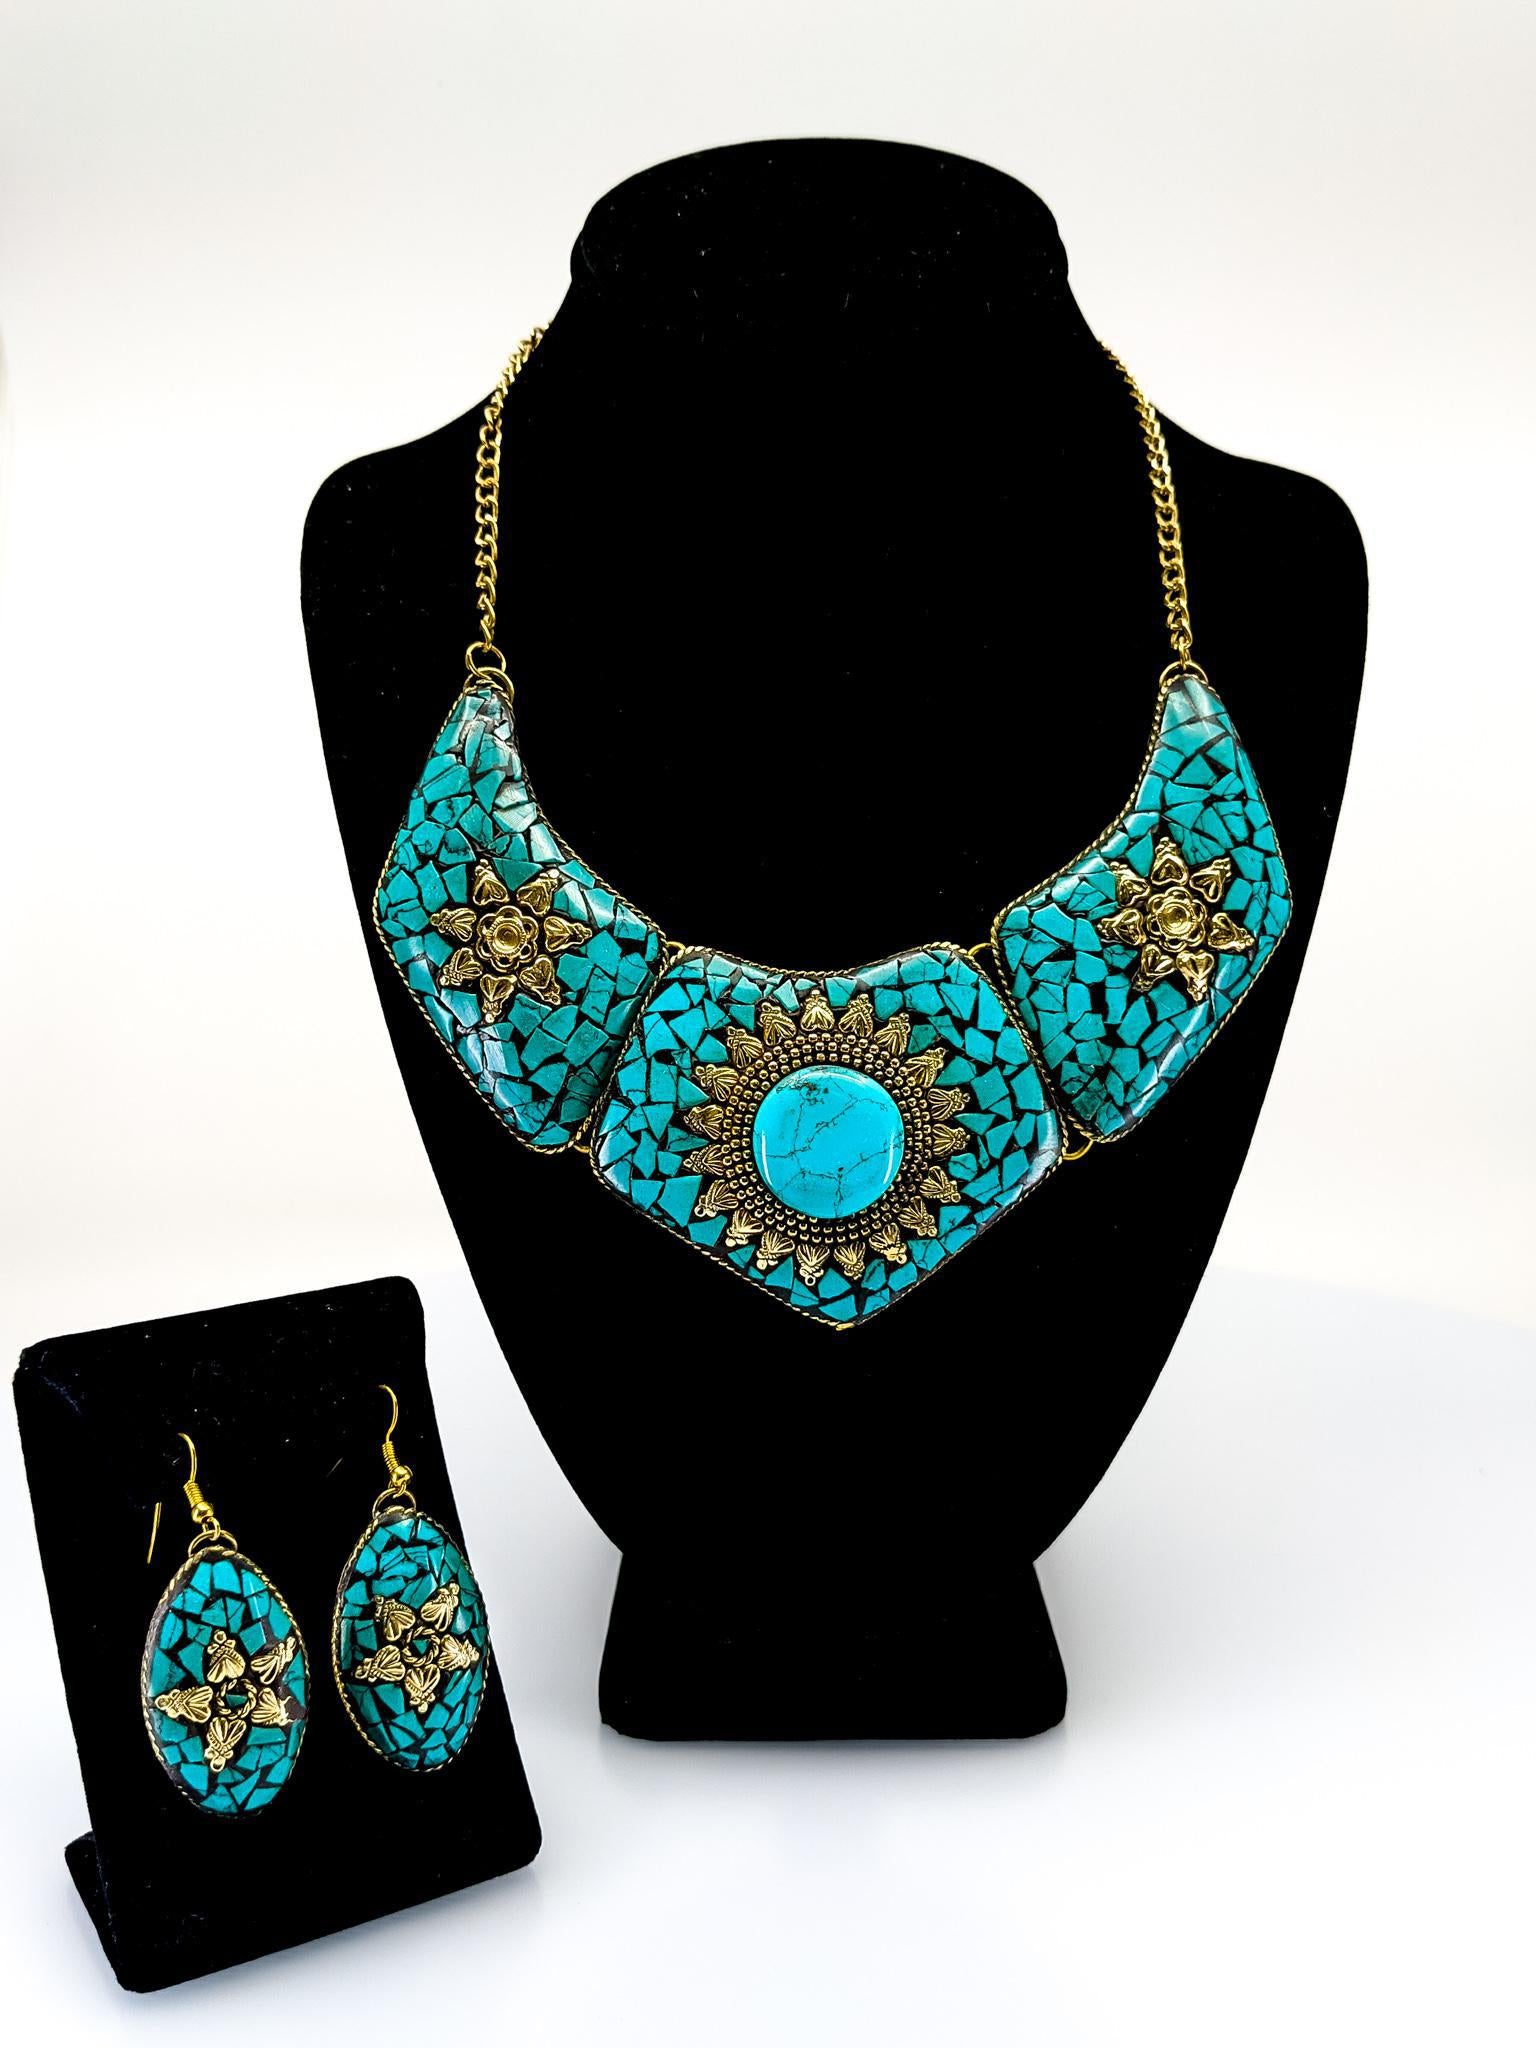 Queen Nefertiti Jewelry Set